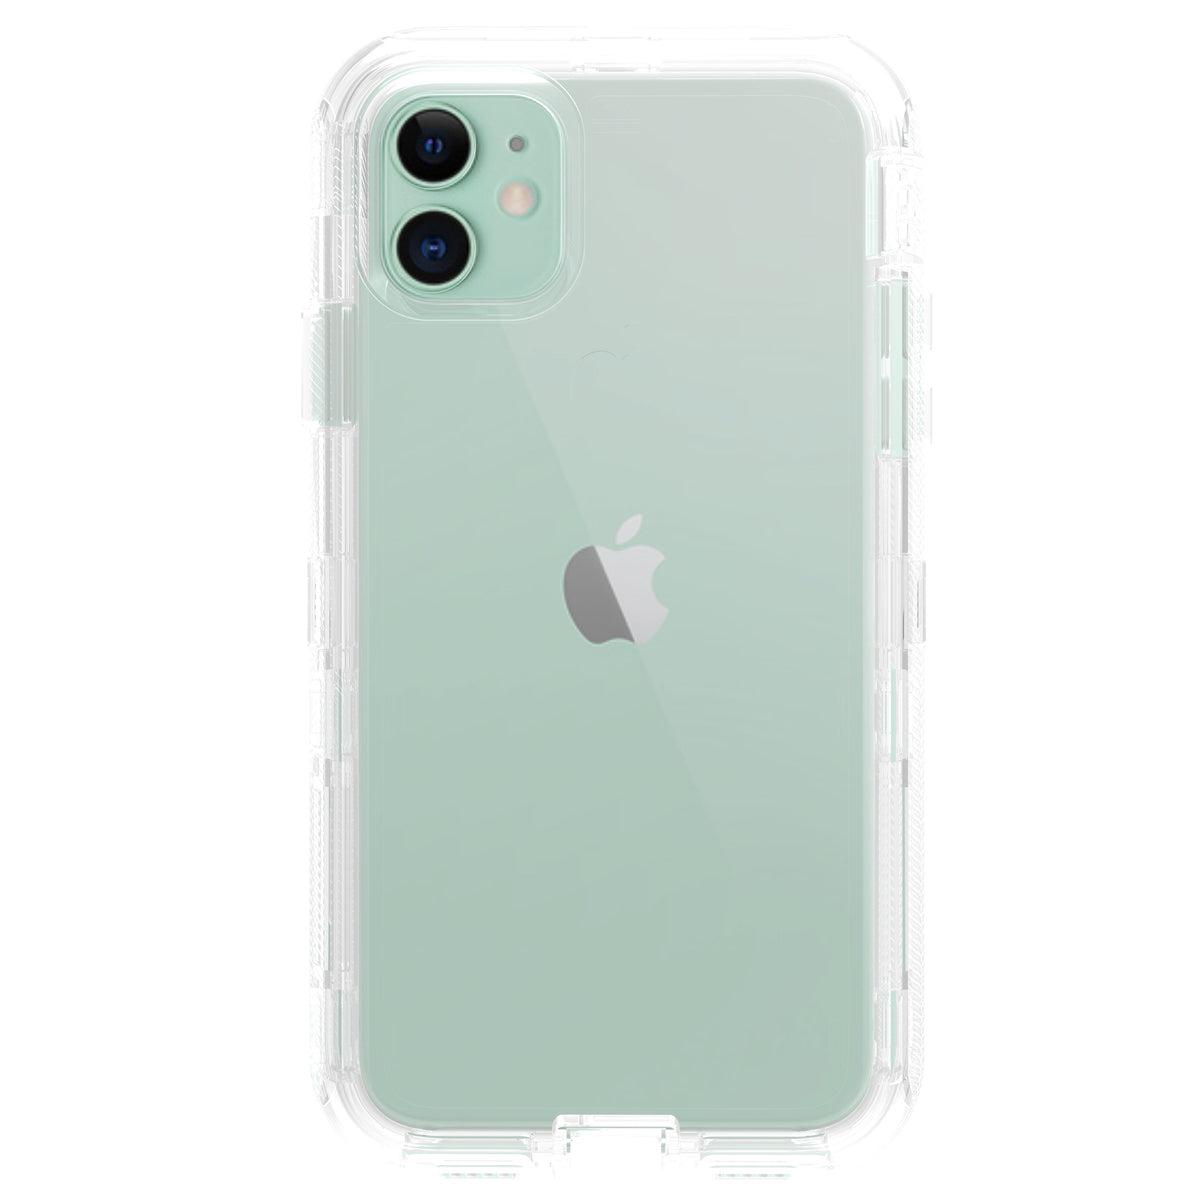 iPhone 6 Plus /7 Plus/8 Plus Clear Diamond Case  (Heavy Duty)